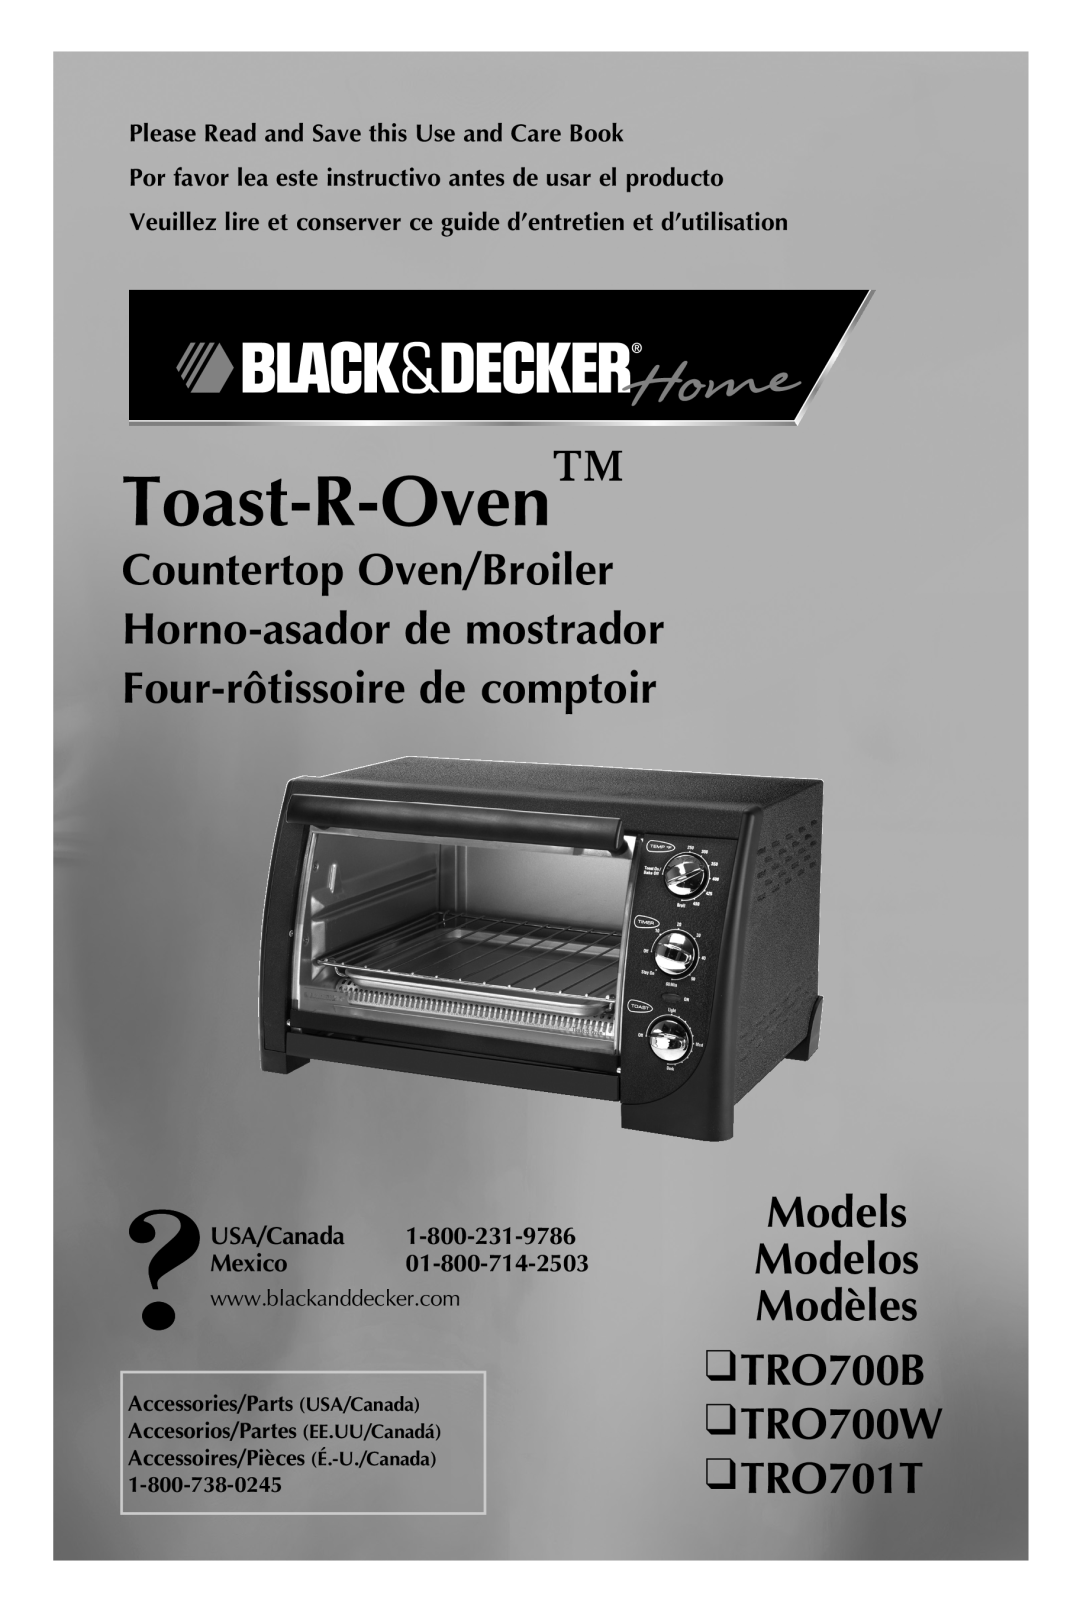 Black & Decker manual Models Modelos Modèles TRO700B TRO700W TRO701T, Toast-R-Oven, USA/Canada Mexico 